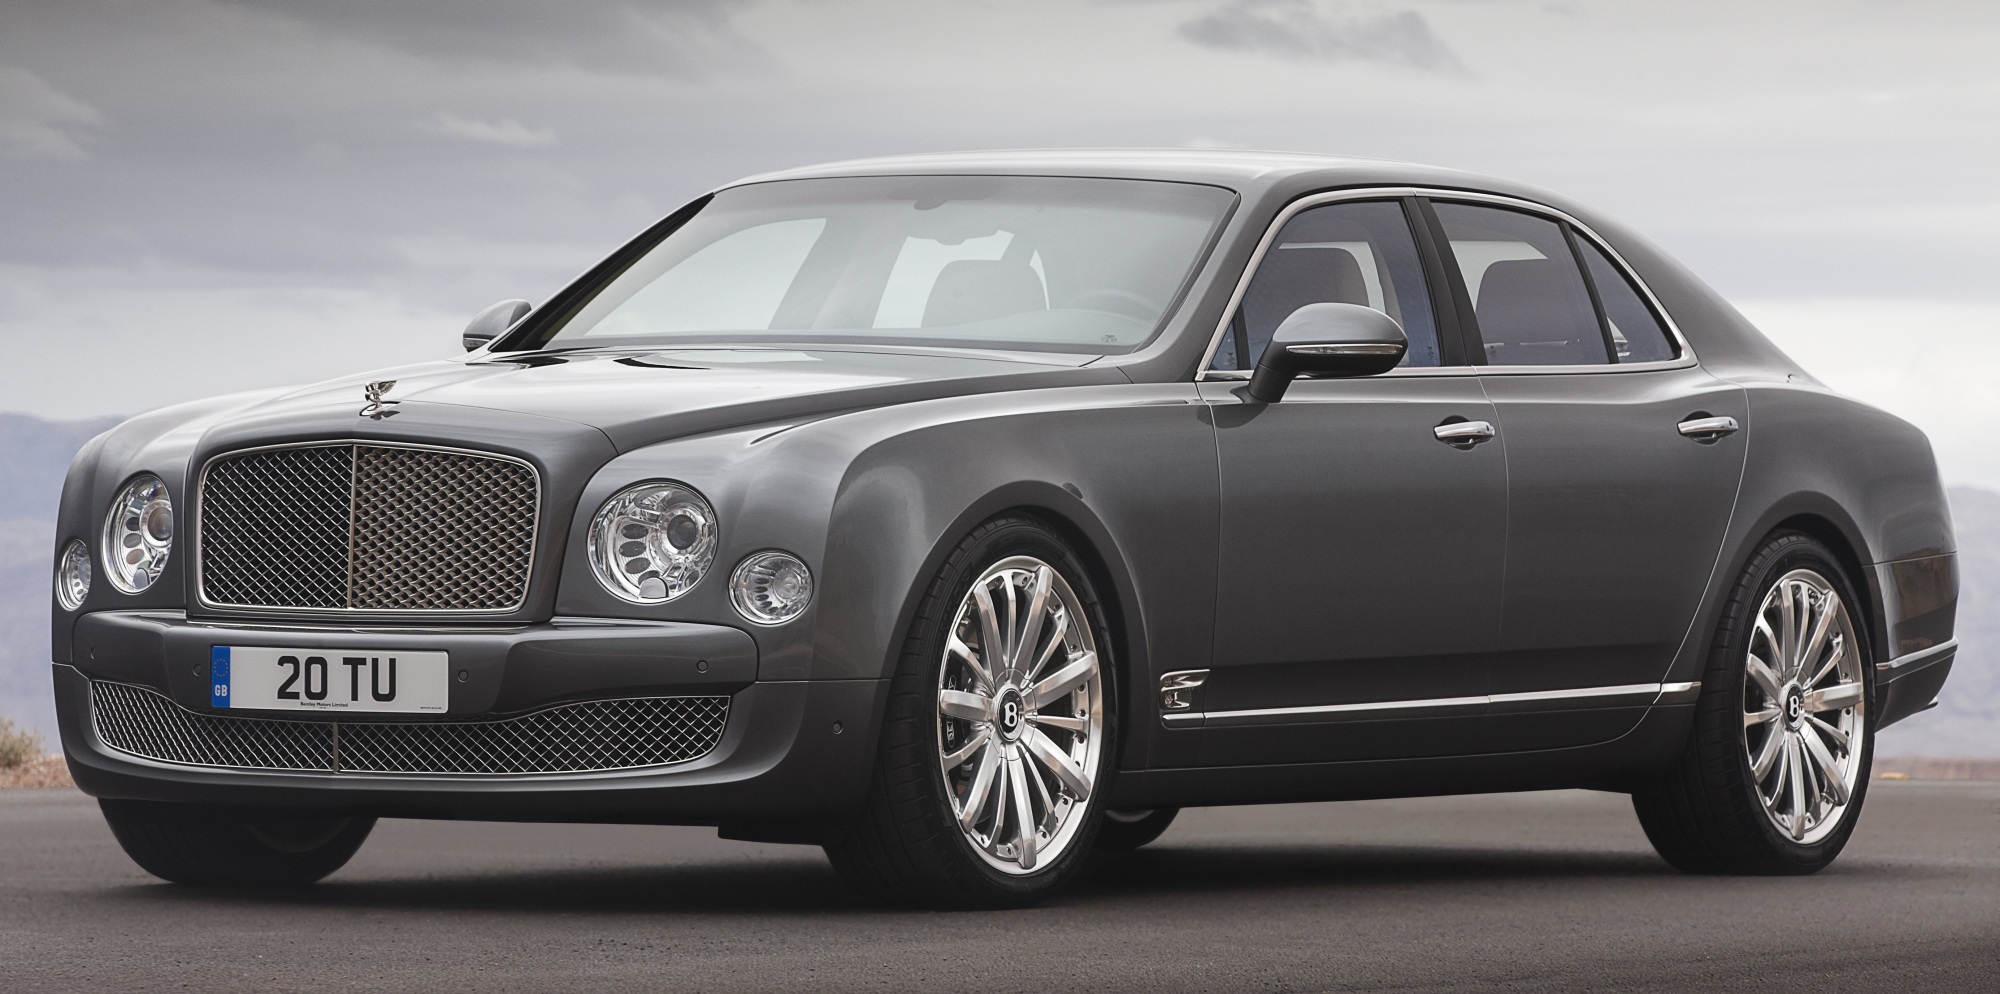  Who Makes Bentley Automobiles